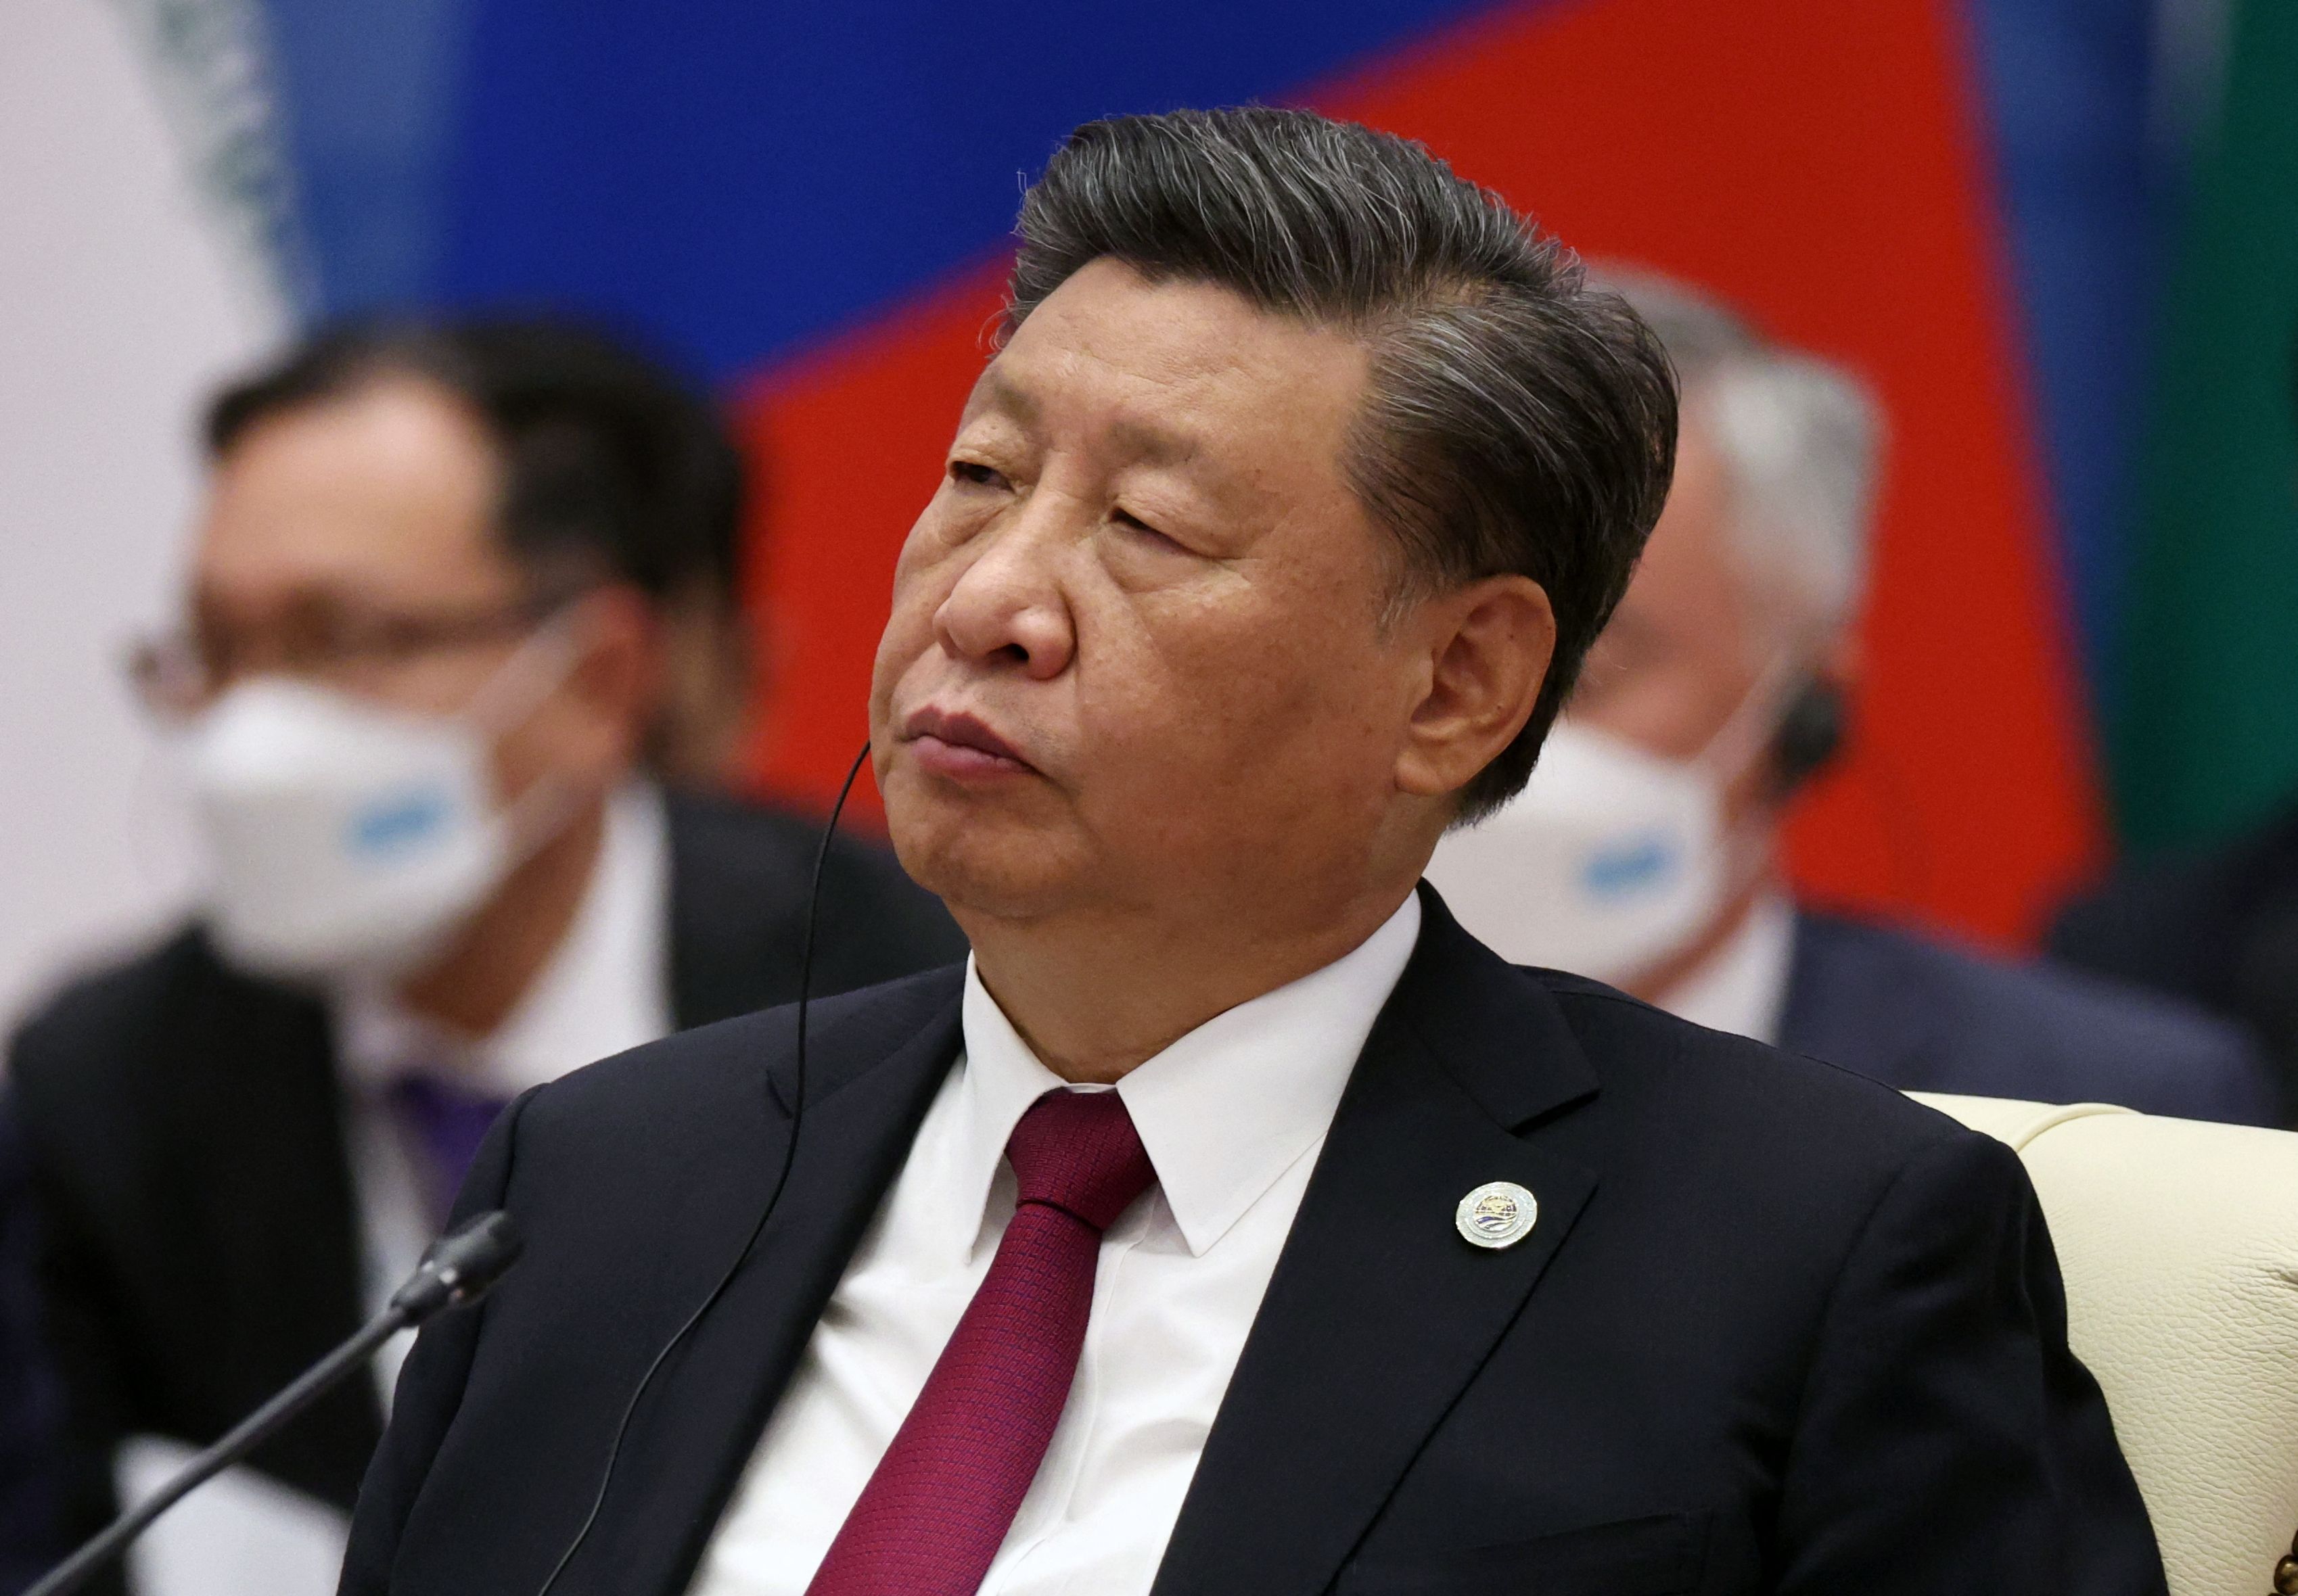 newsweek.com - Ewan Palmer - Xi Jinping trends online amid coup rumors, canceled flights